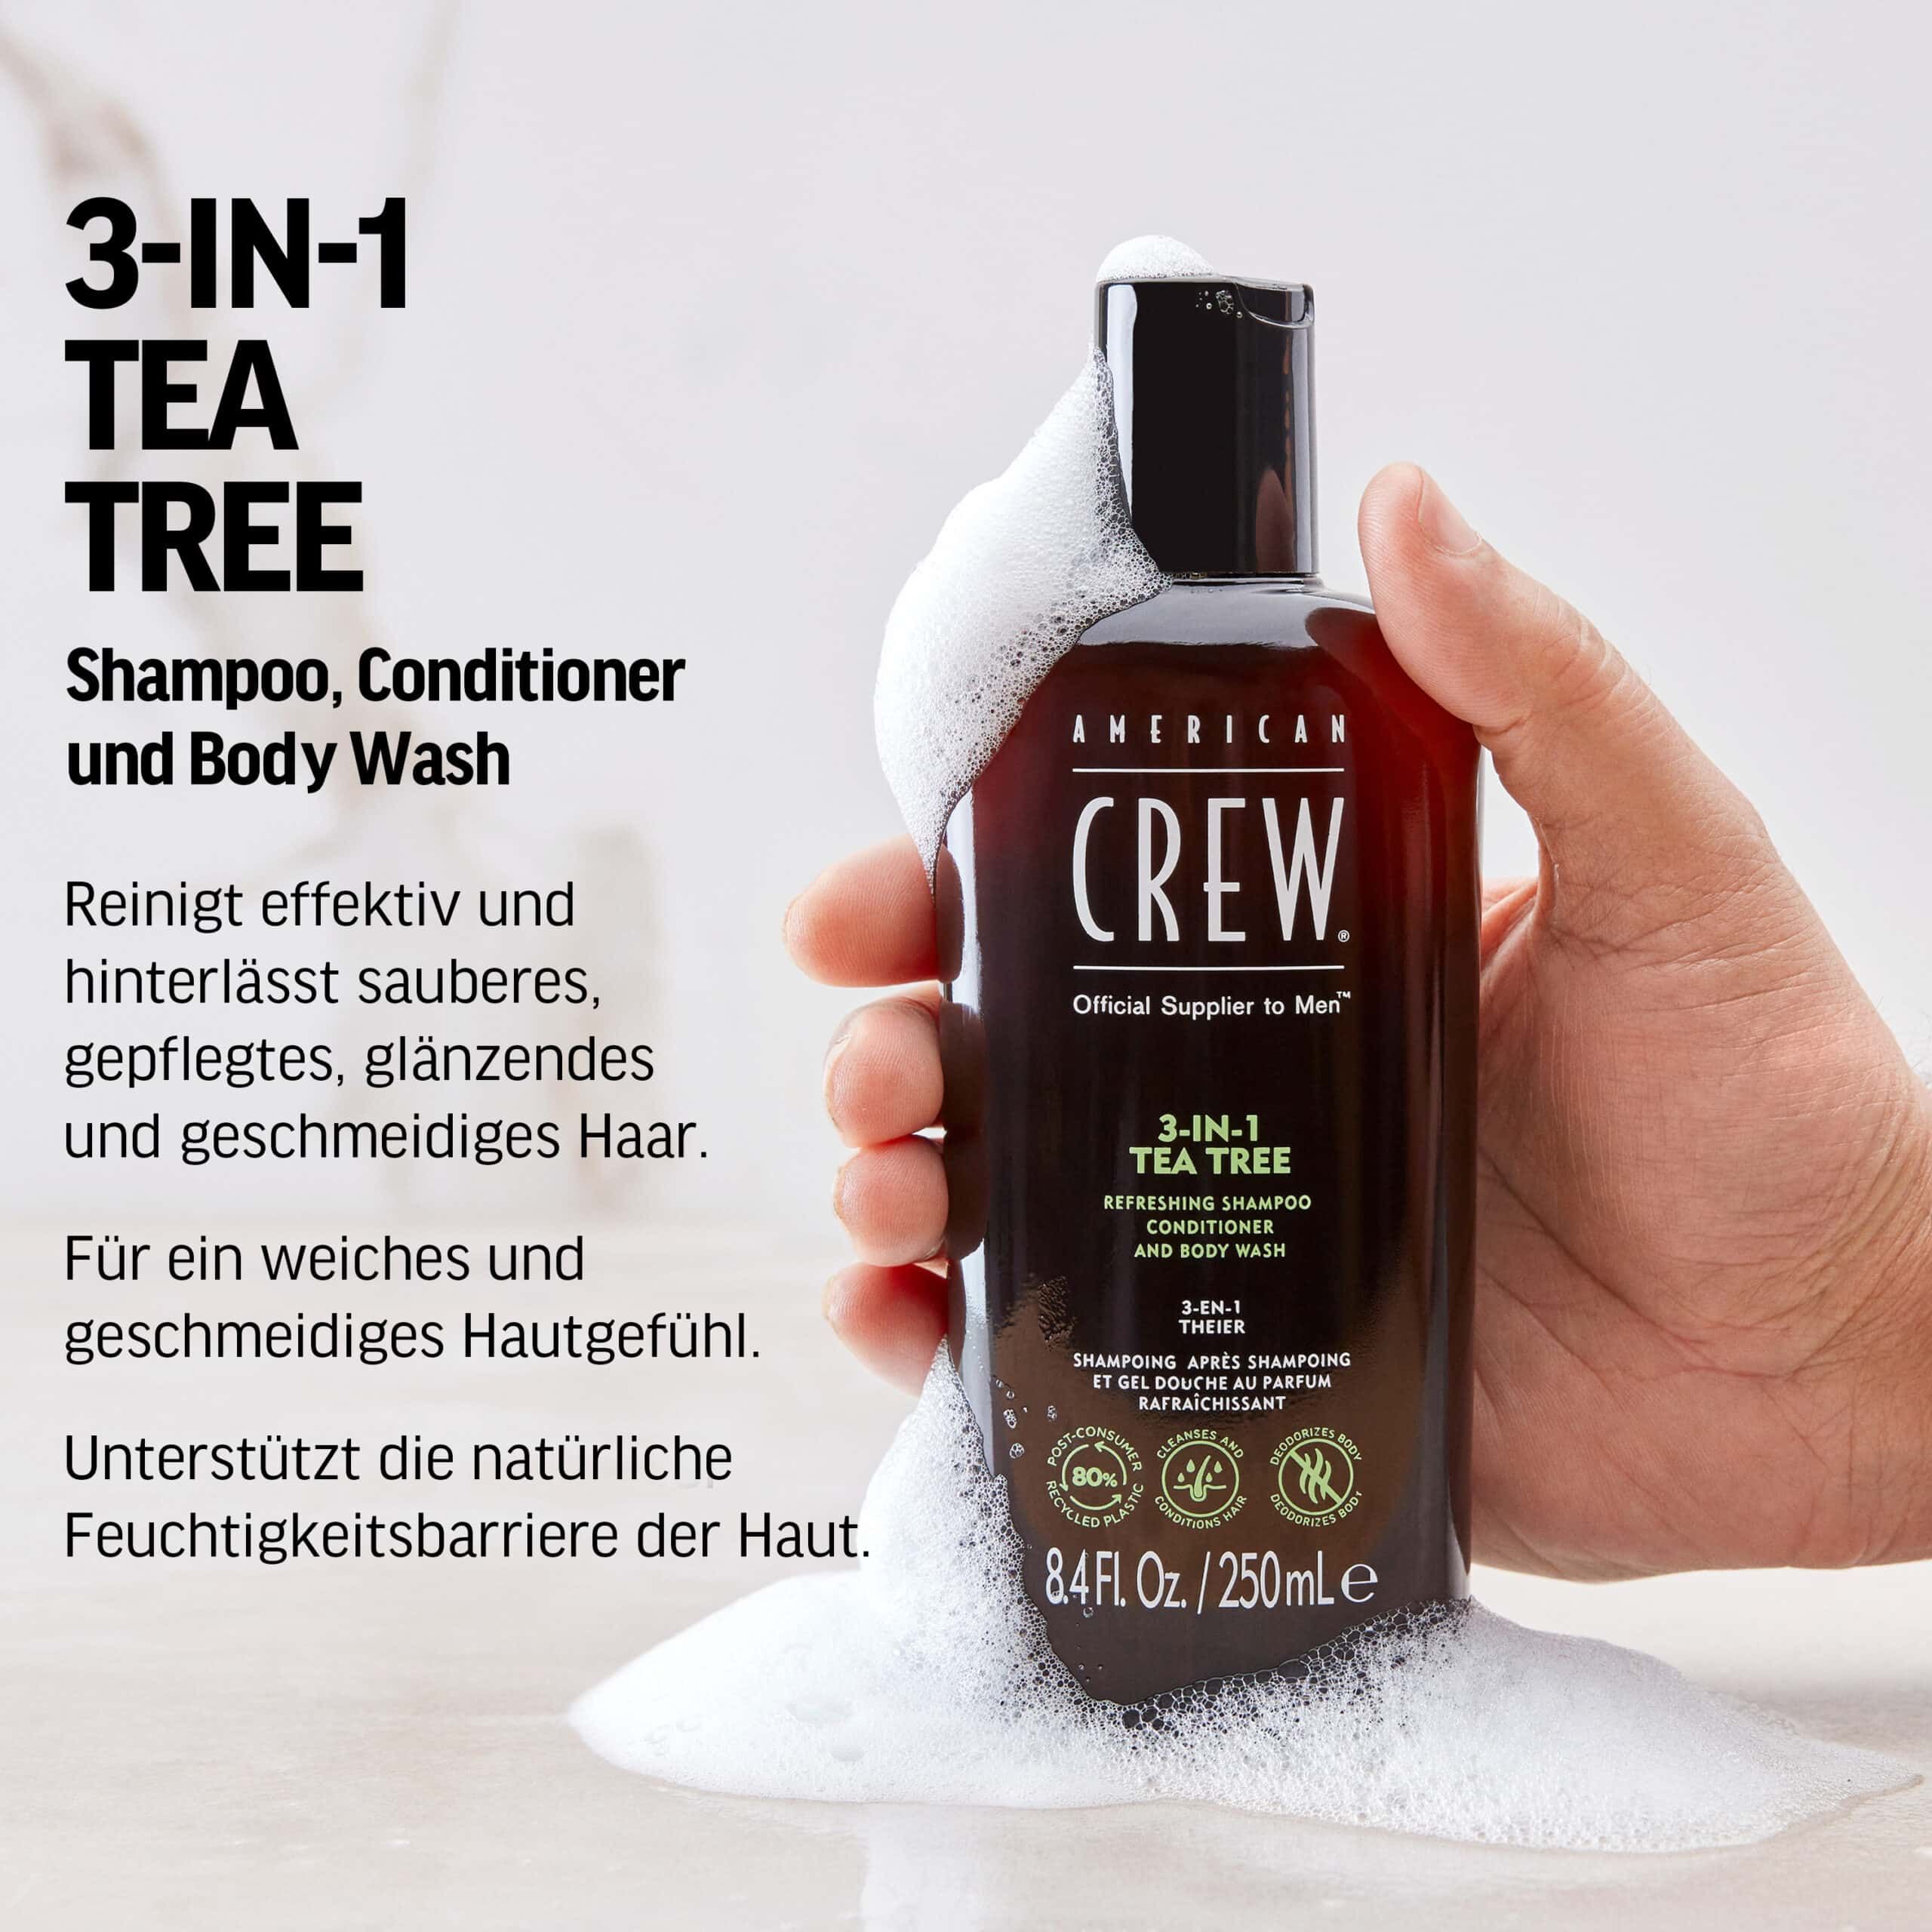 Revlon AMERICAN CREW 3 in 1 Tea Tree Shampoo